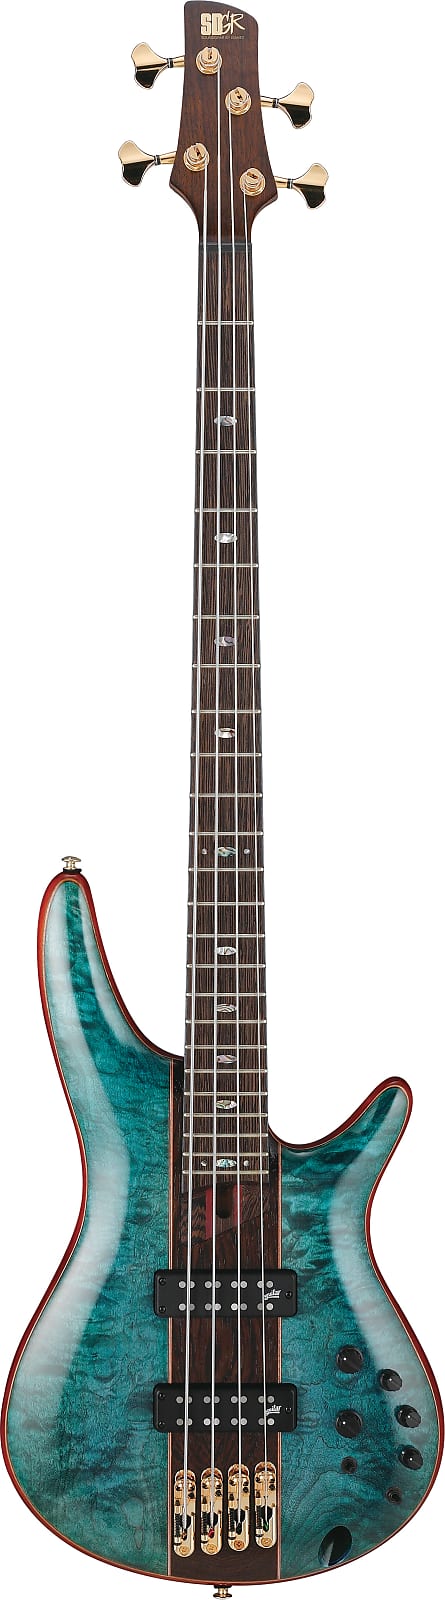 Ibanez Premium SR2400 Bass Guitar - Caribbean Green Low Gloss